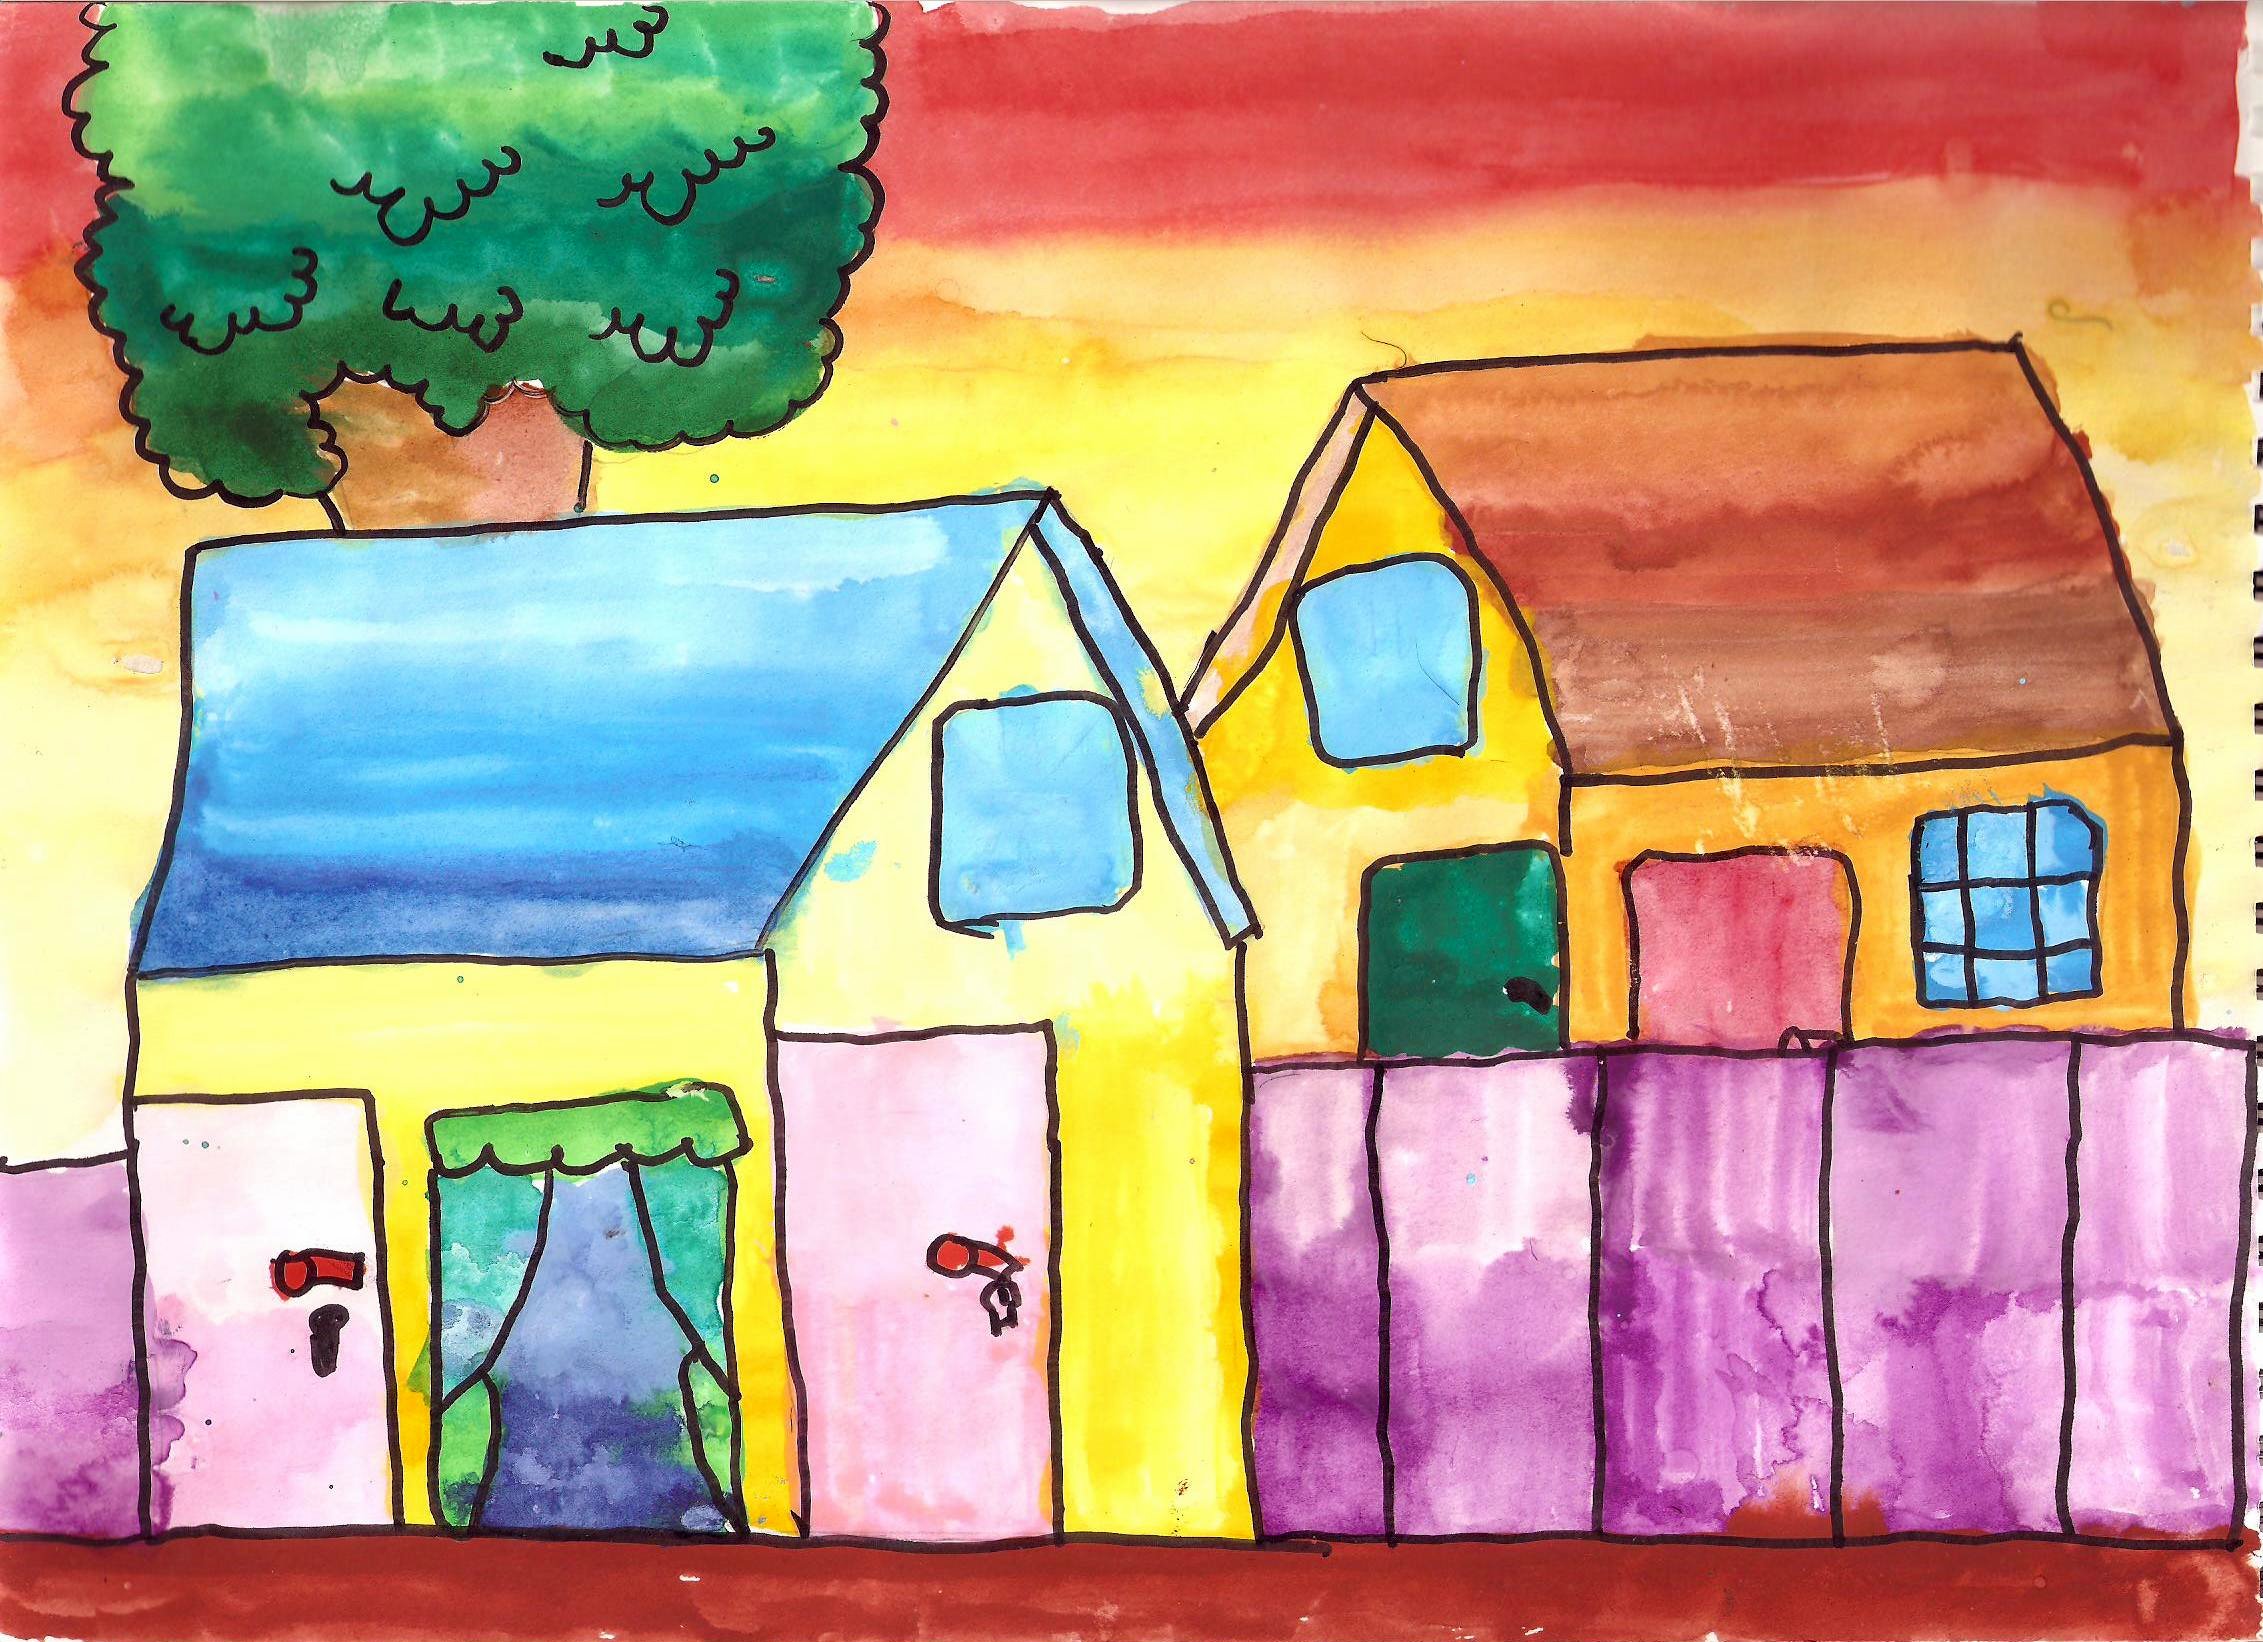 64 Mewarnai Gambar Images Pinterest Coloring Lukisan Buah Buahan Rumahku